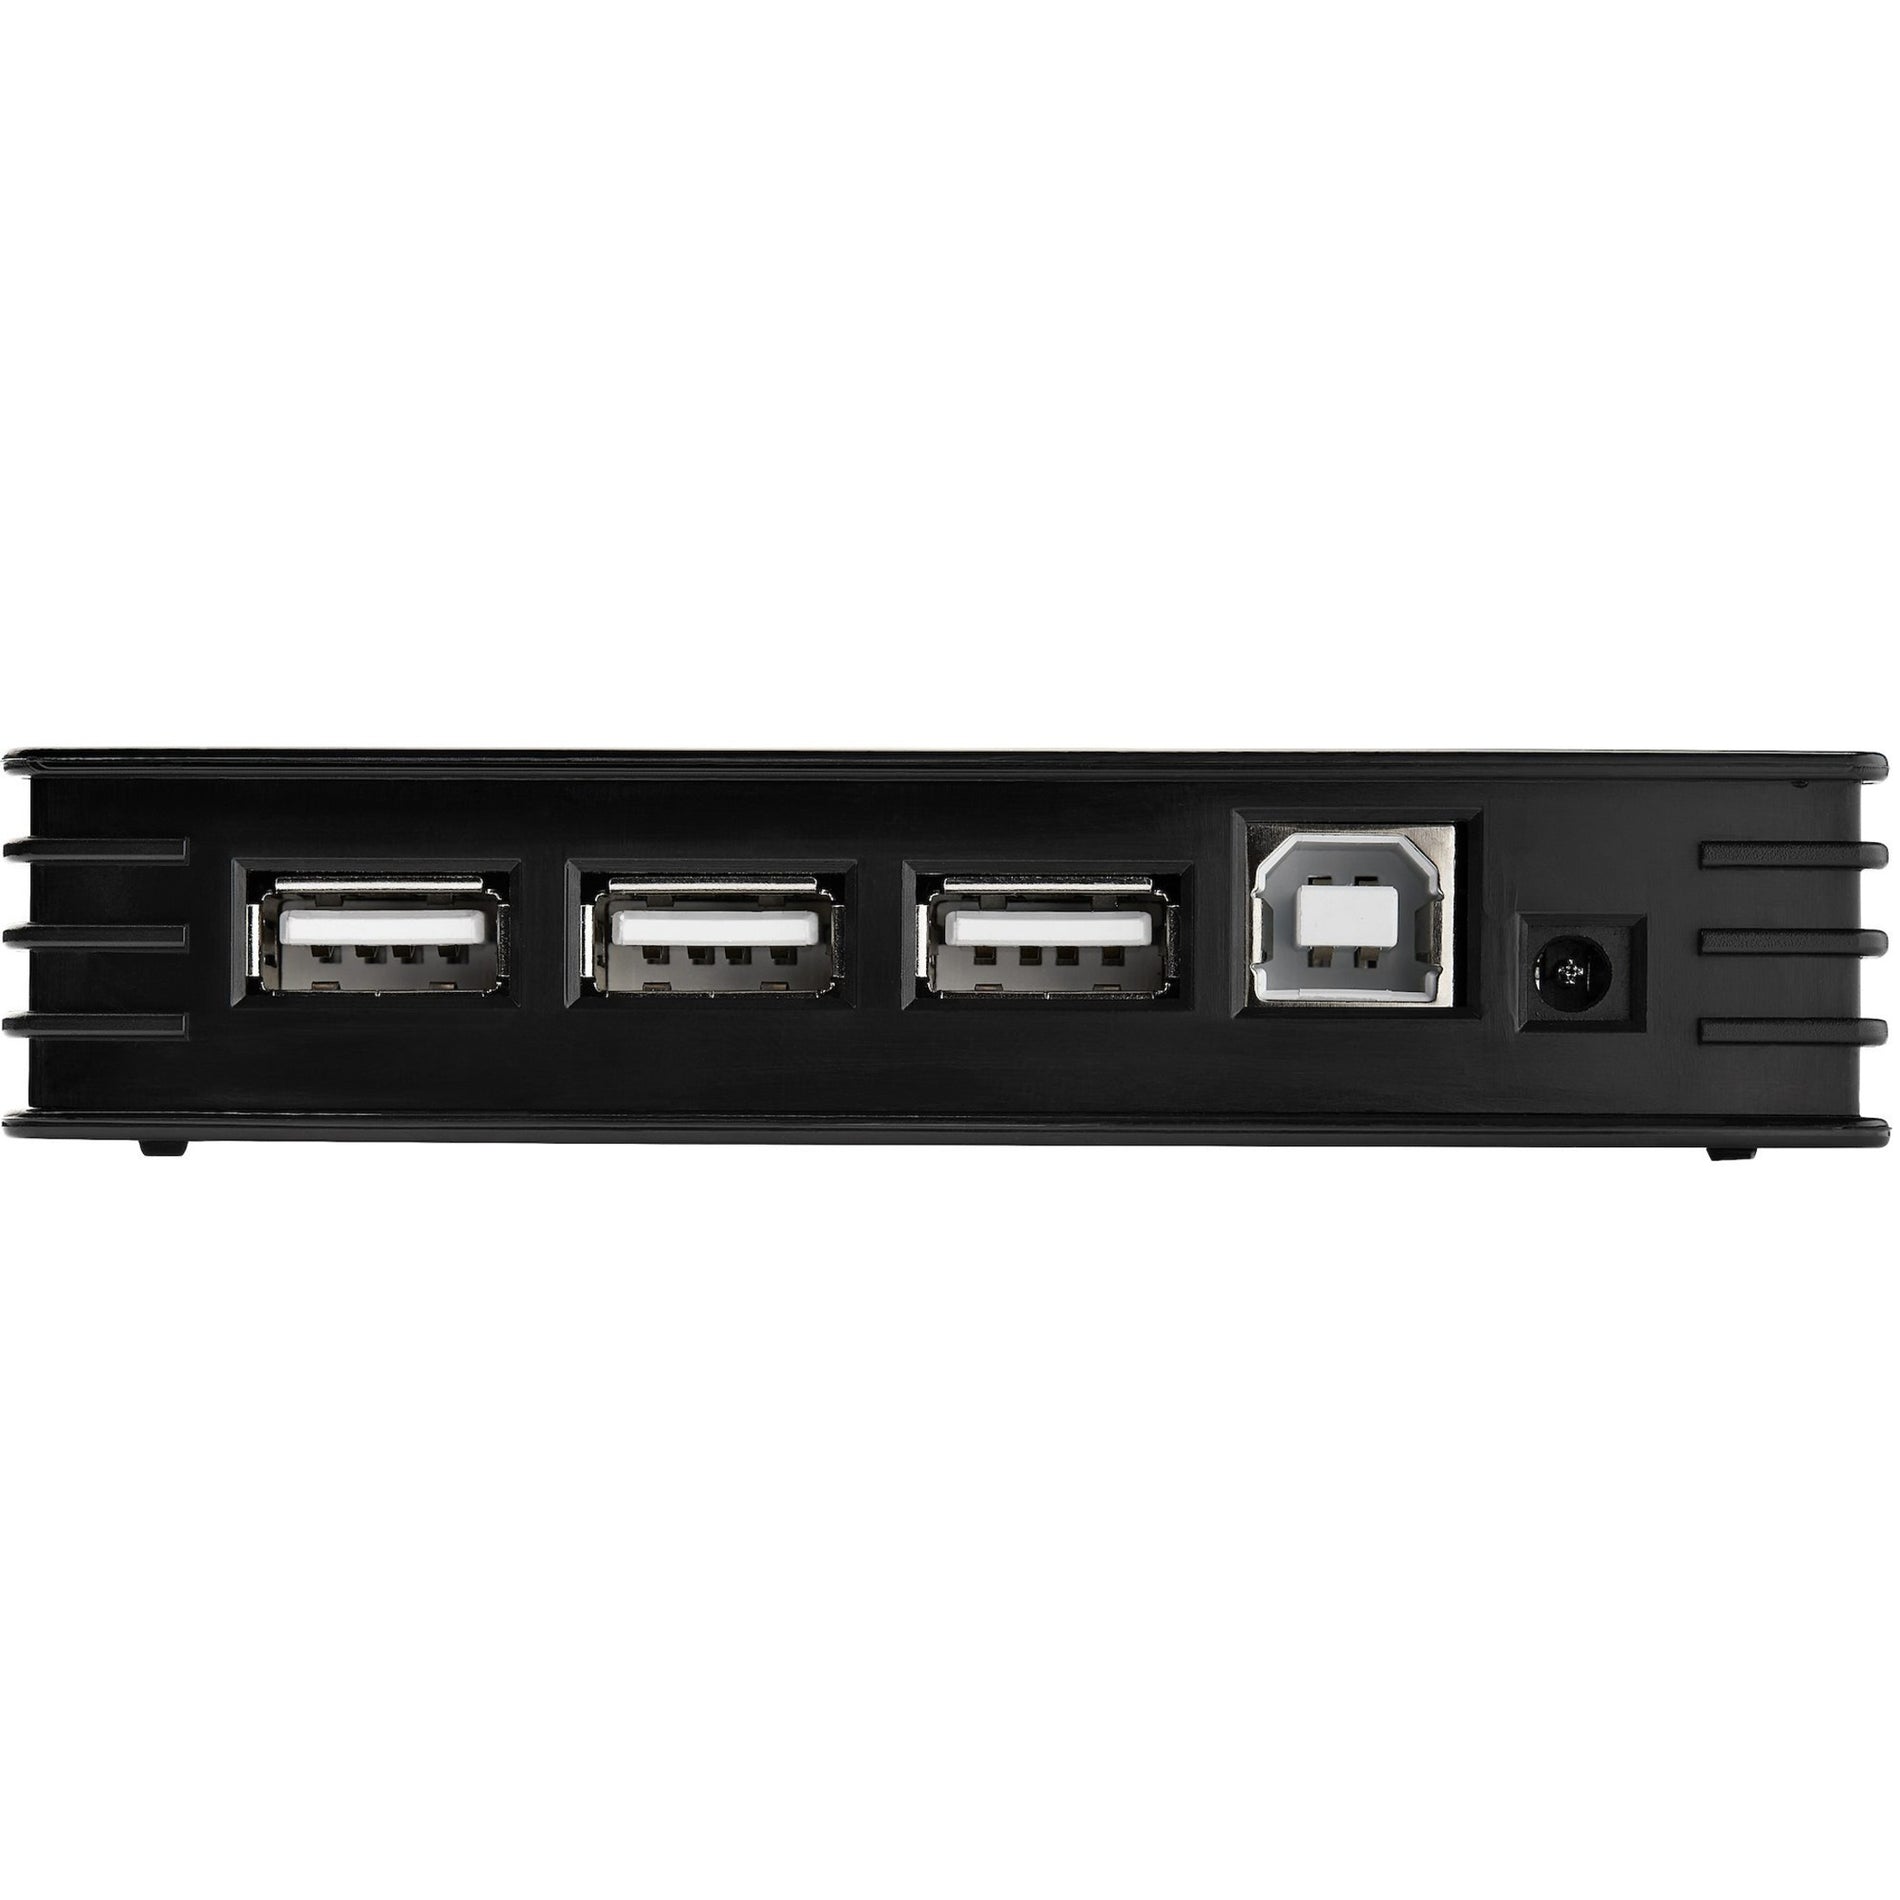 StarTech.com ST7202USB 7 Port USB 2.0 Hub - Hi-Speed USB, Expand Your Connectivity